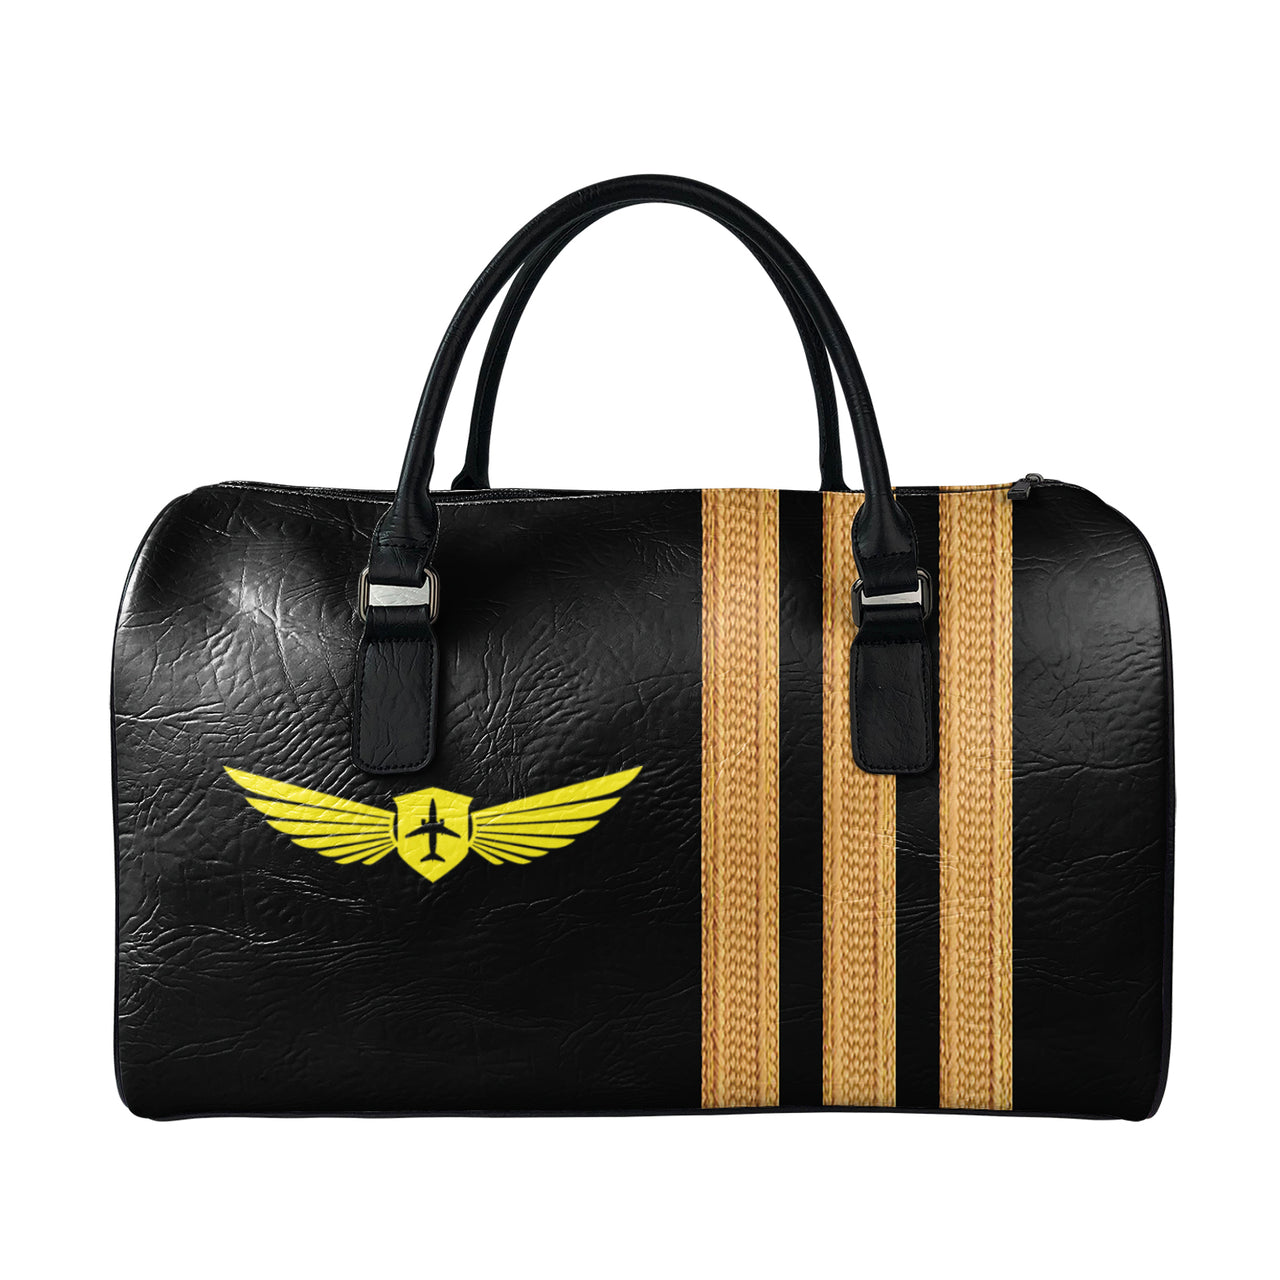 Badge & Golden Epaulettes (4,3,2 Lines) Designed Leather Travel Bag